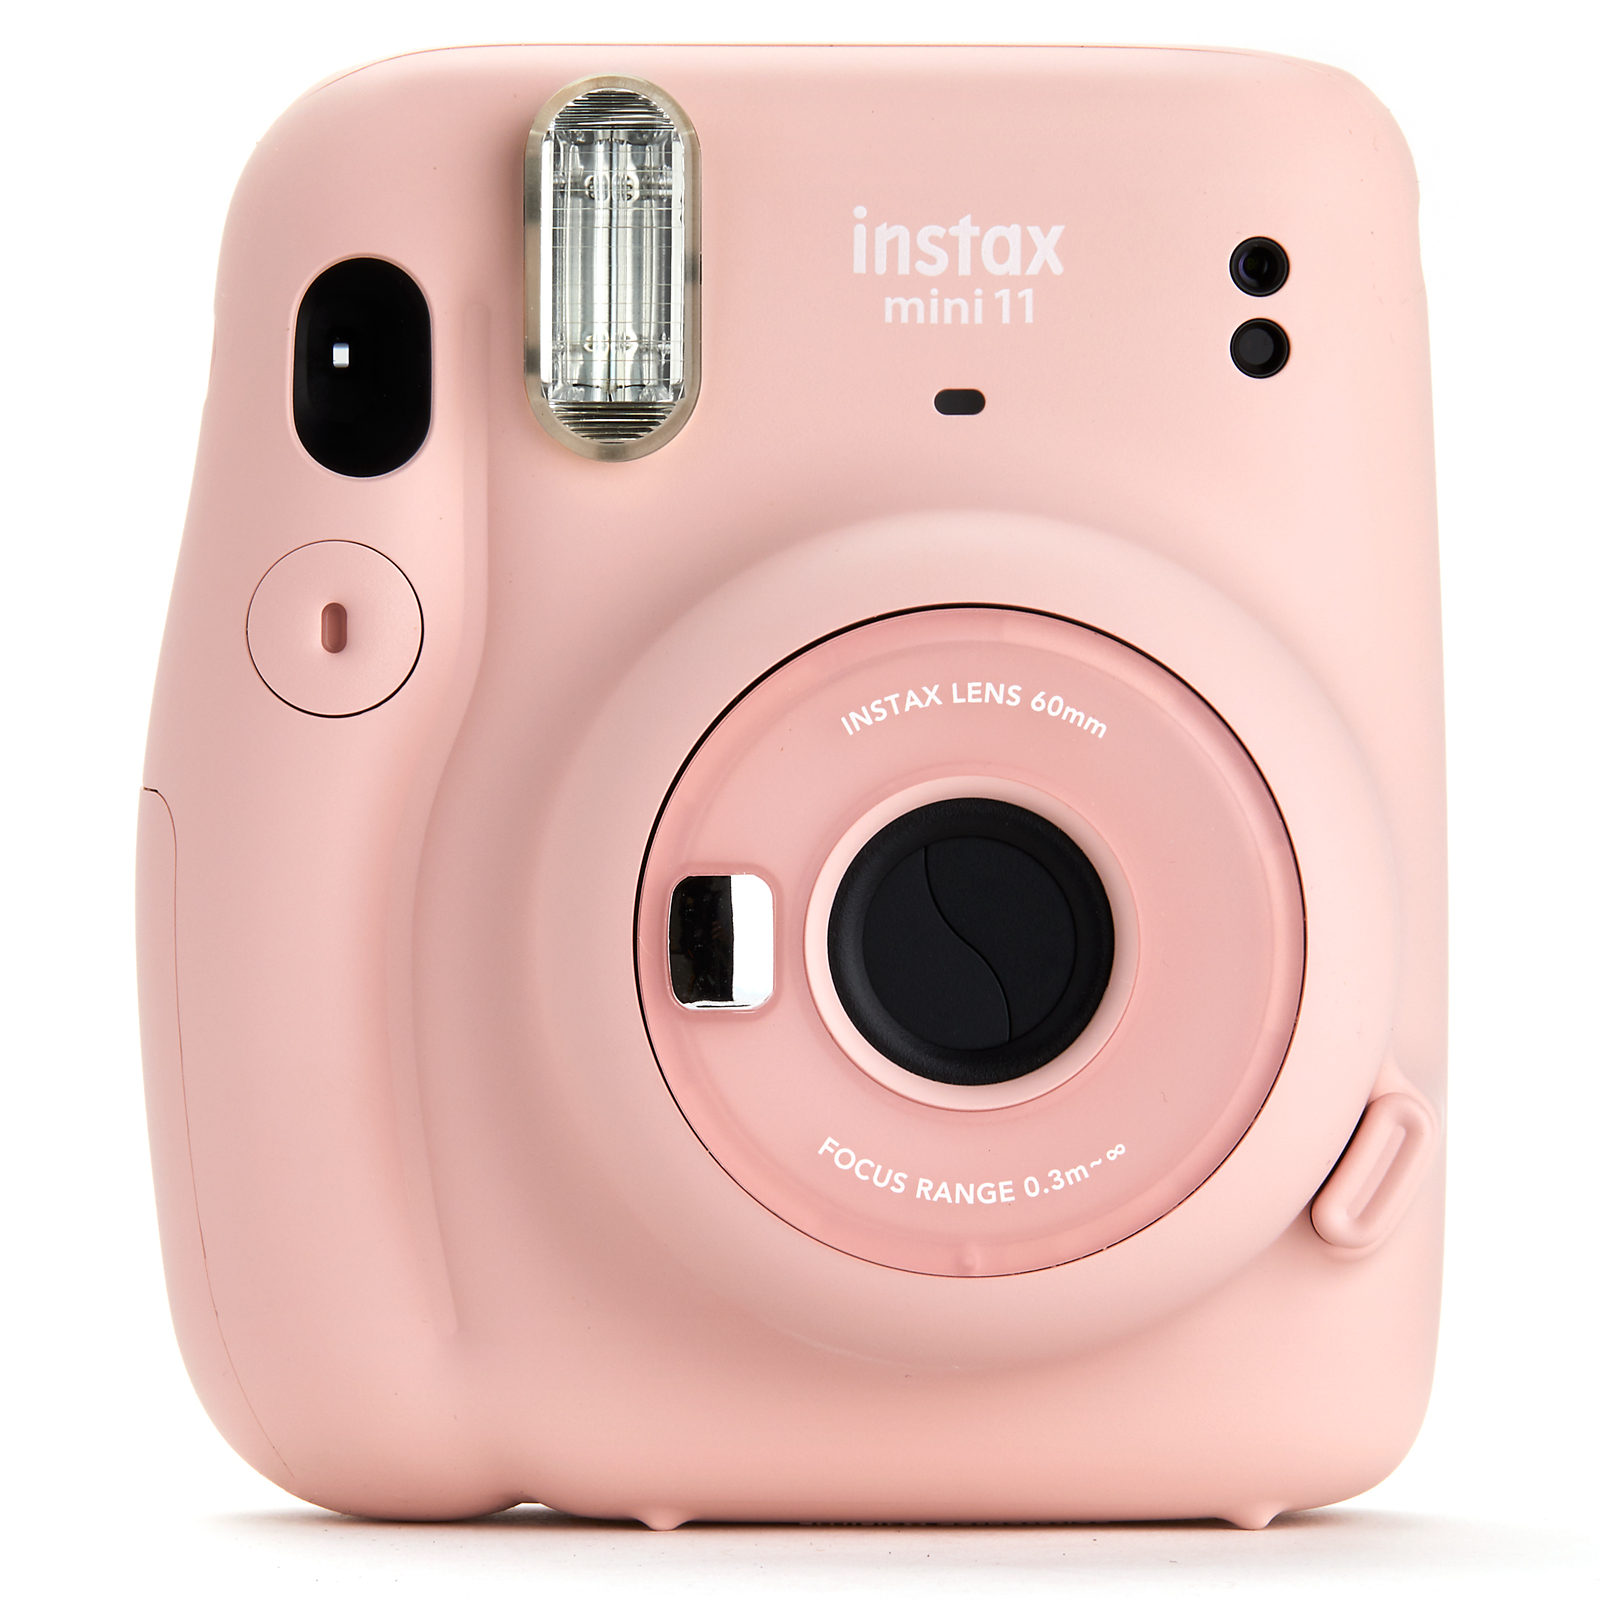 tweeling Gelukkig handicap Photo4Less | Fujifilm Instax Mini 11 Instant Camera - Blush Pink (16654774)